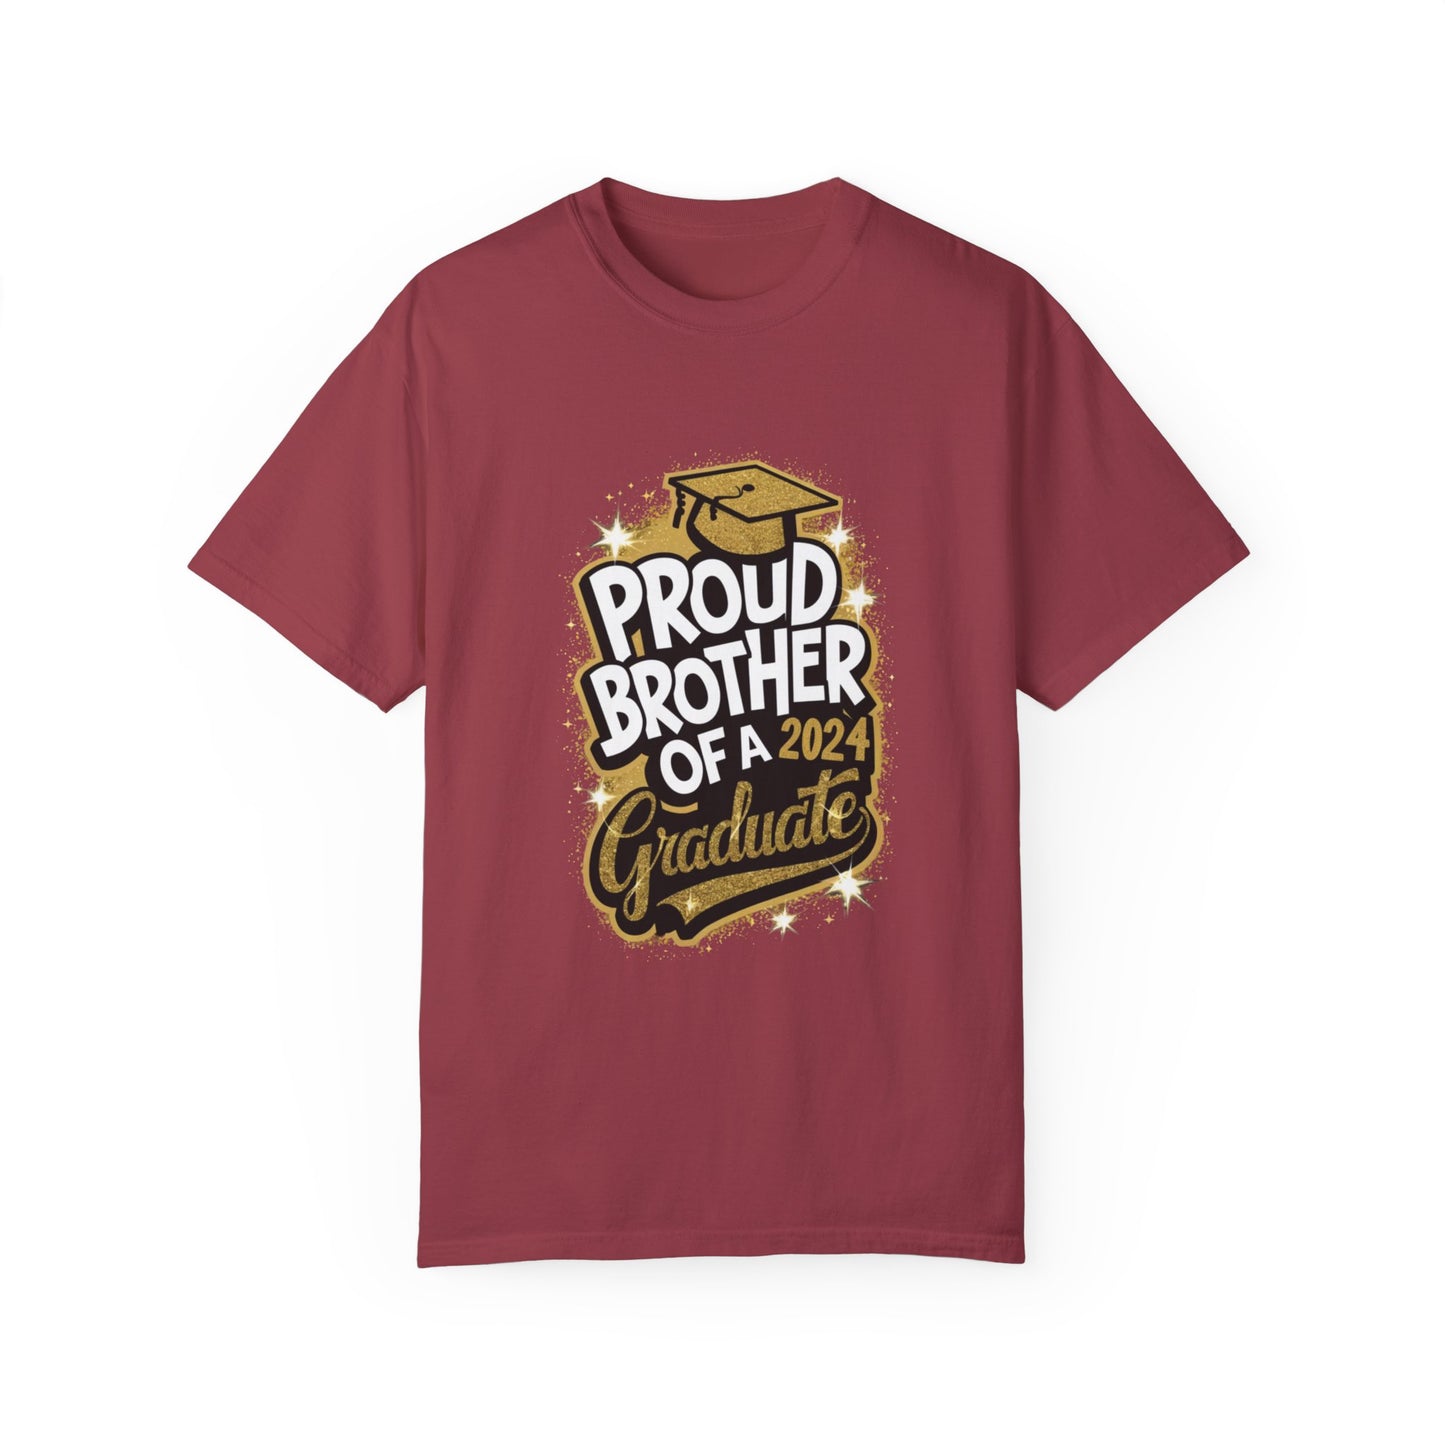 Proud Brother of a 2024 Graduate Unisex Garment-dyed T-shirt Cotton Funny Humorous Graphic Soft Premium Unisex Men Women Chili T-shirt Birthday Gift-7